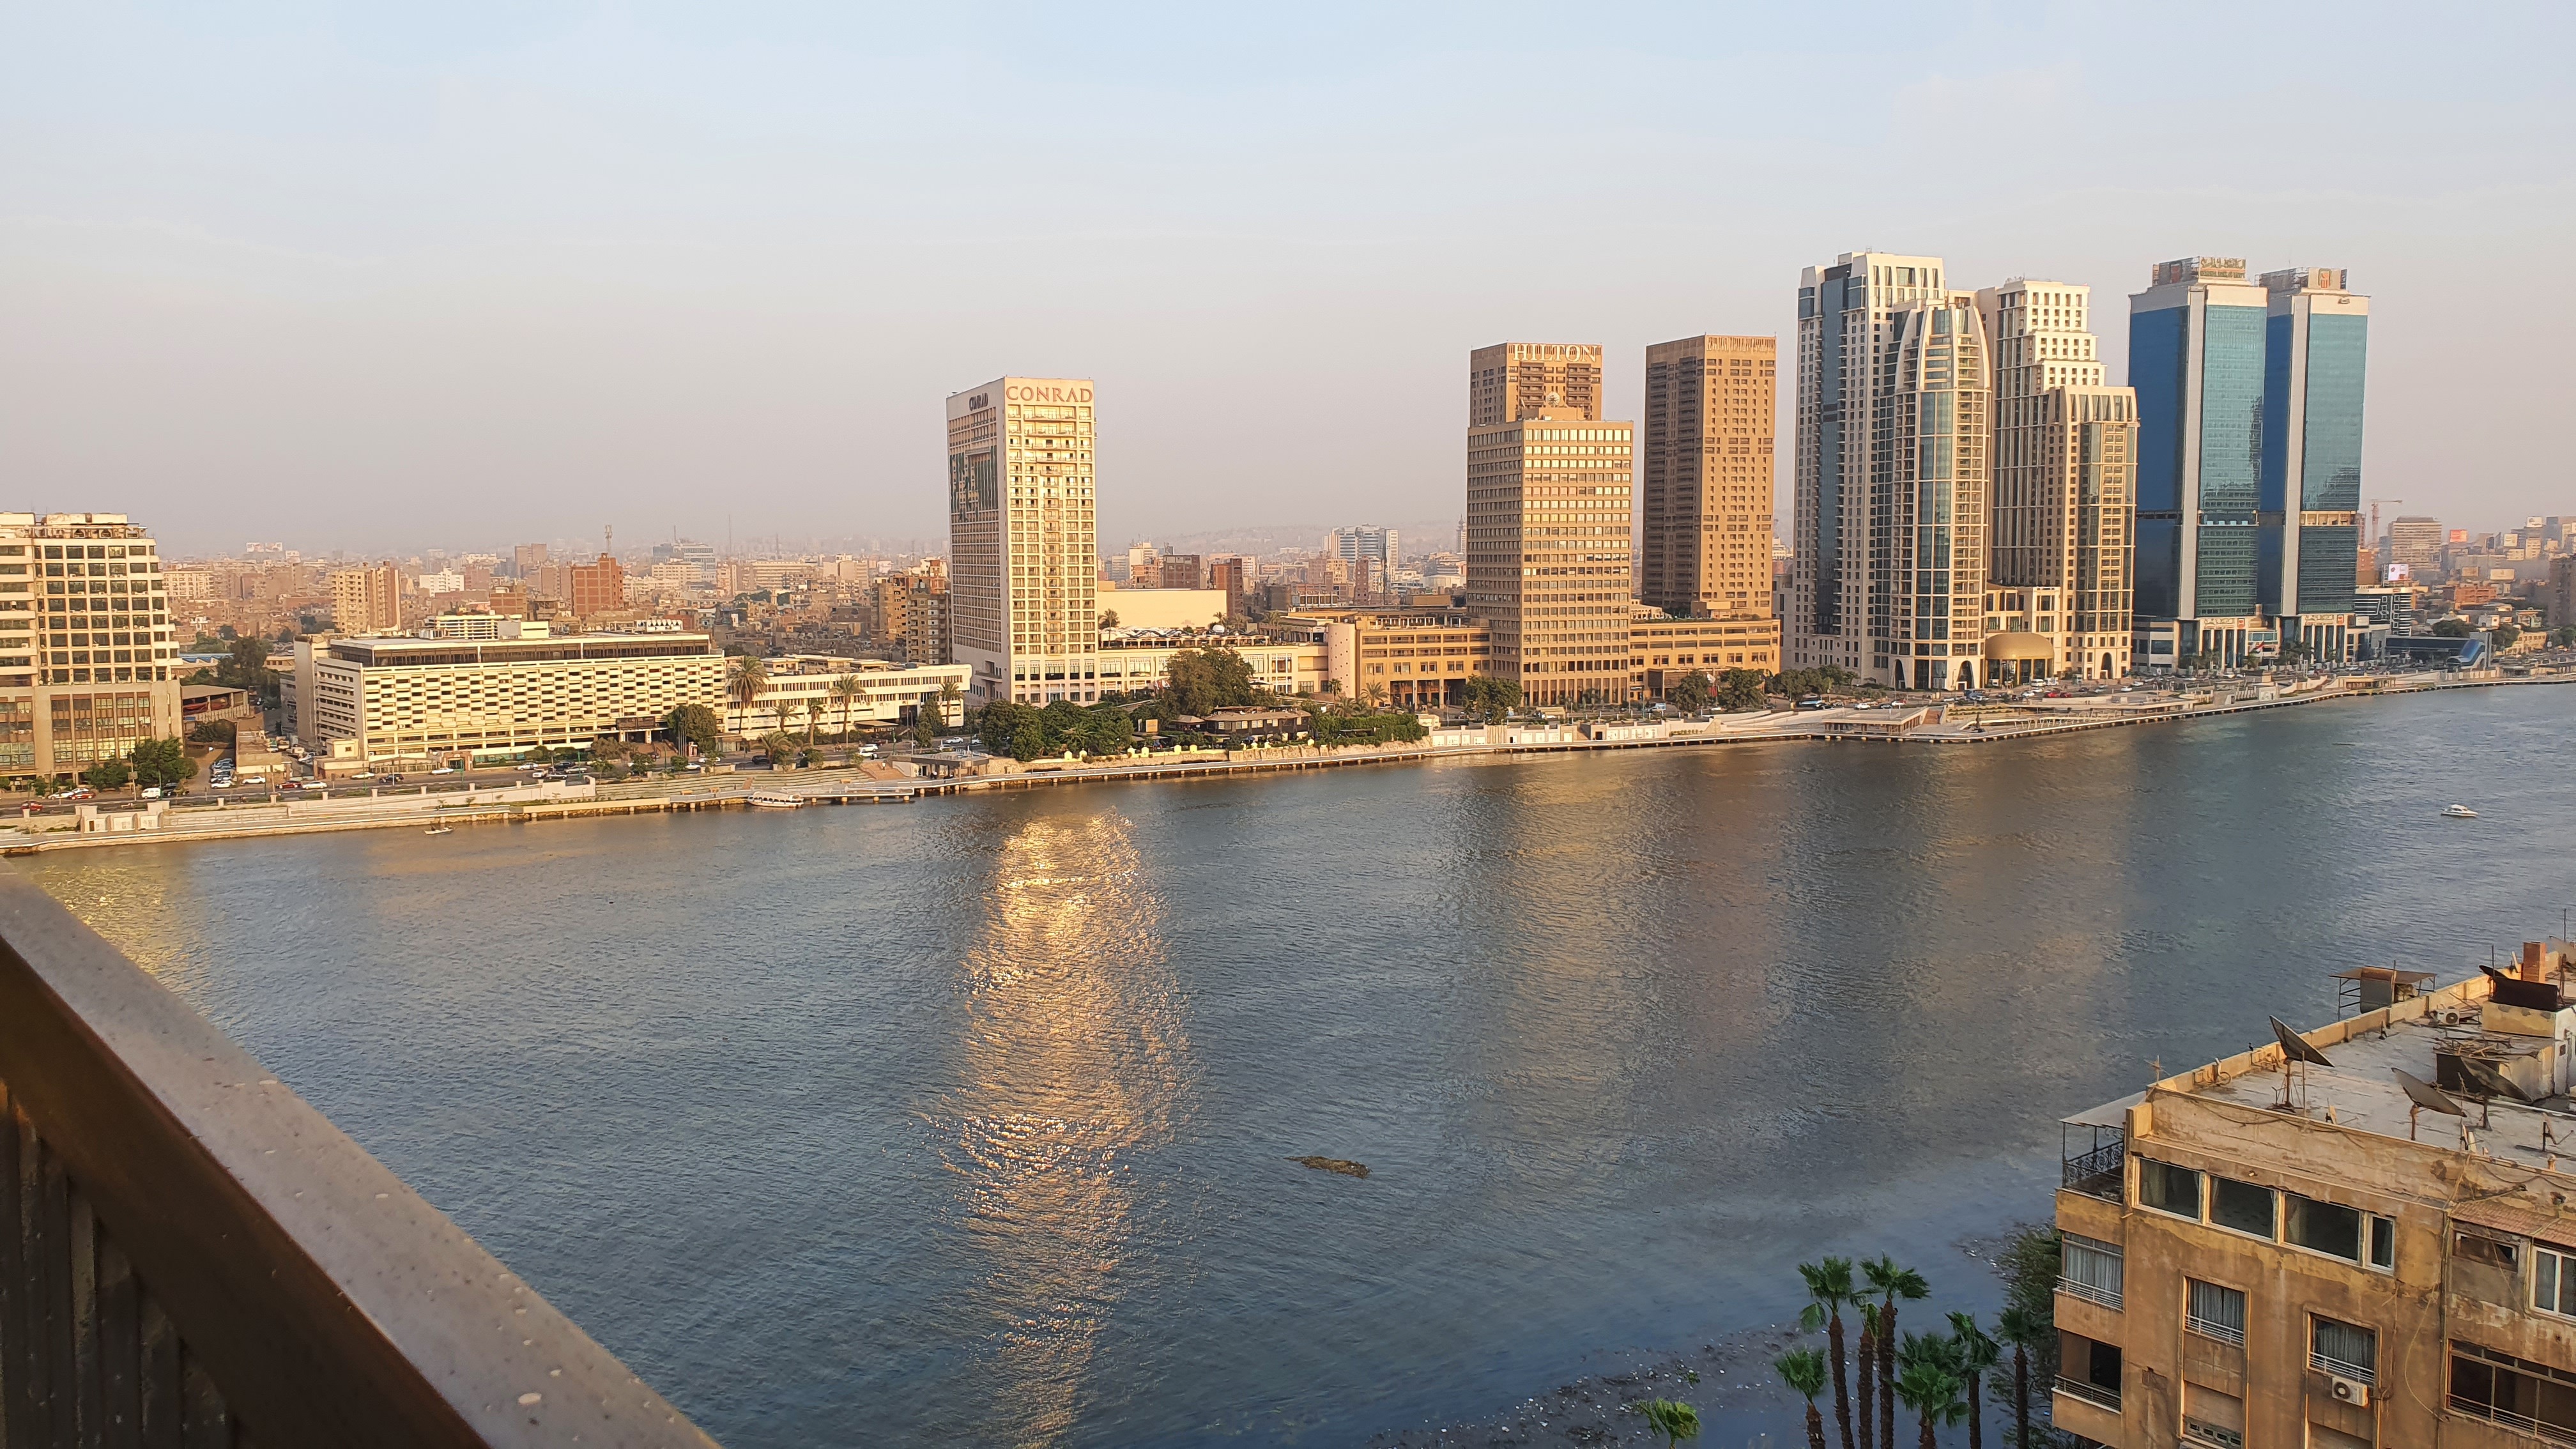 River in egypt